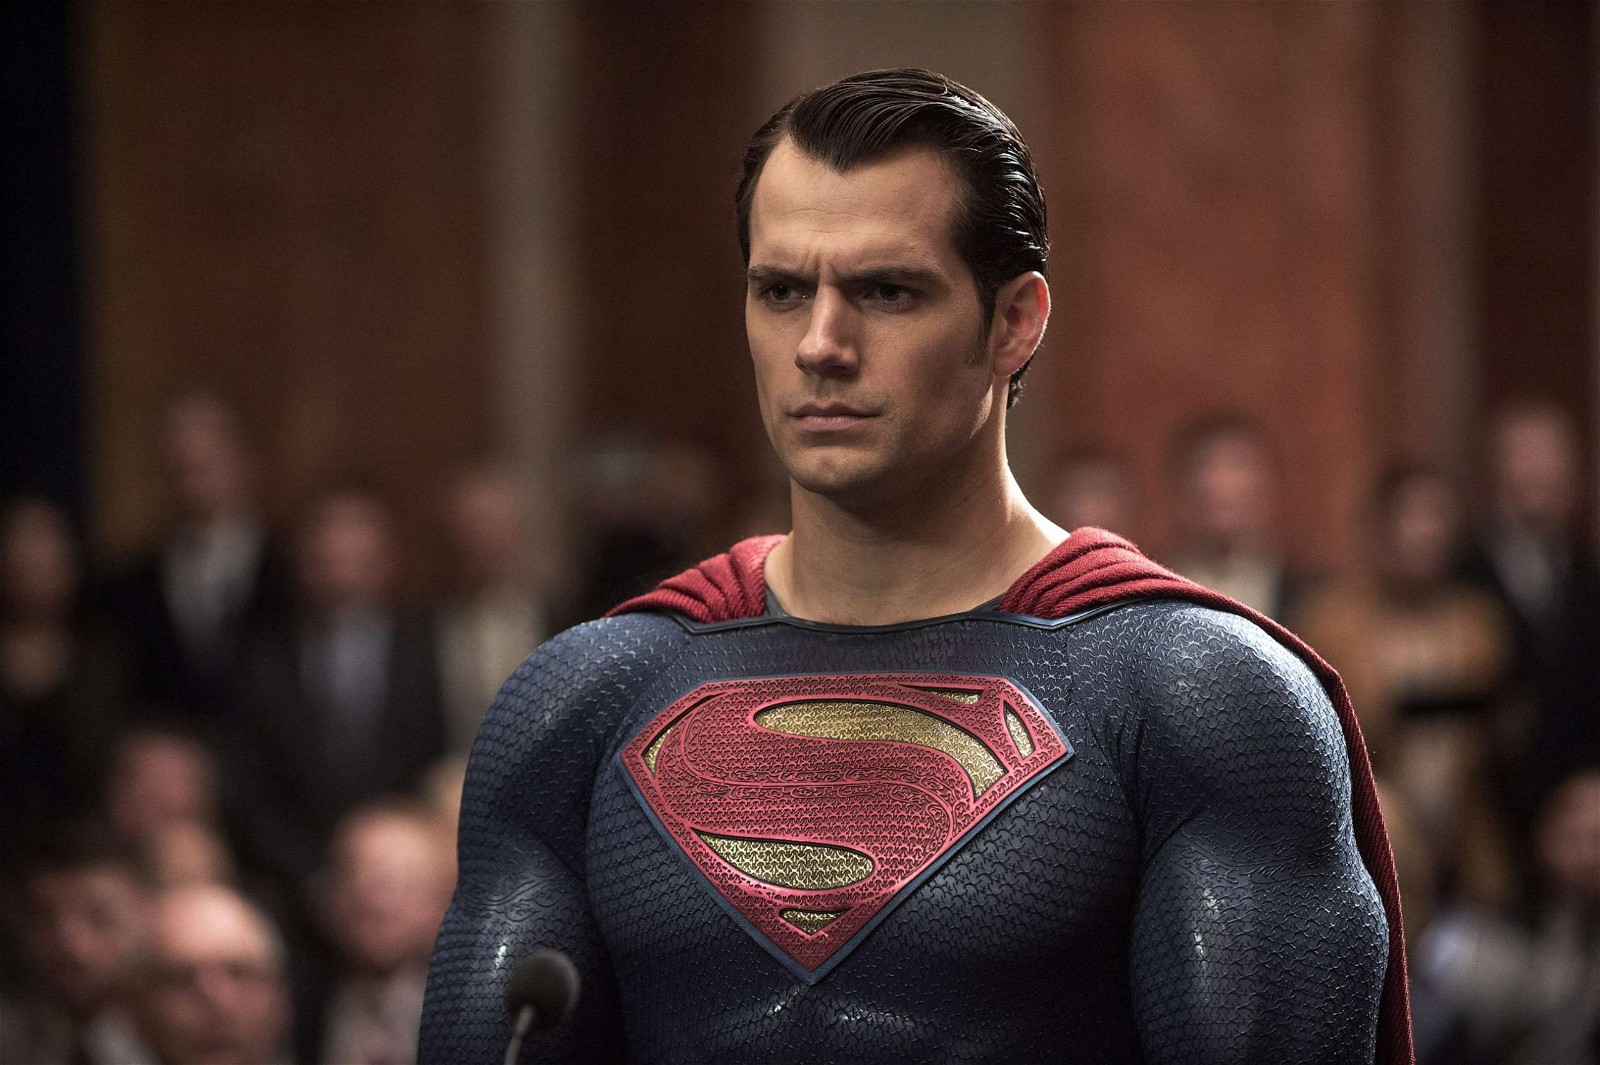 Unlike Superman in Batman v Superman: Dawn of Justice, James Gunn's Superman will be tonally different